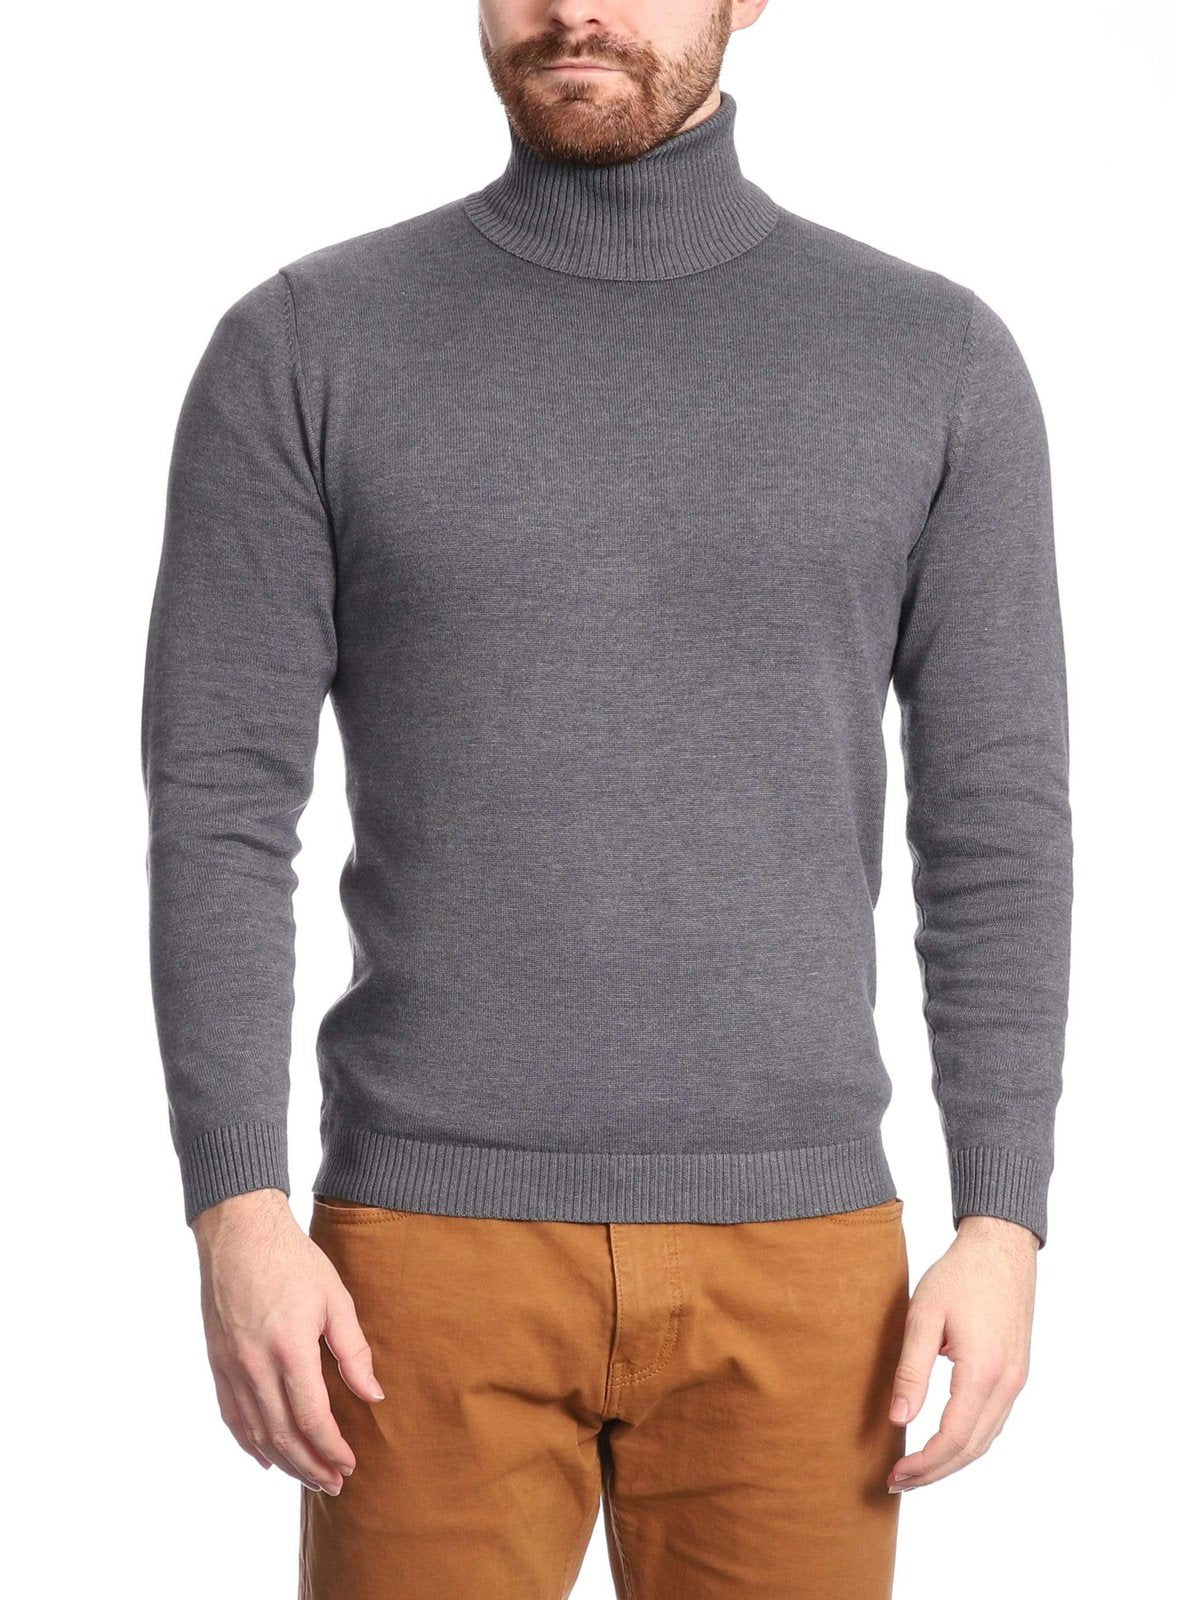 Arthur Black Default Category Migrated Arthur Black Men's Solid Gray Pullover Cotton Blend Turtleneck Sweater Shirt